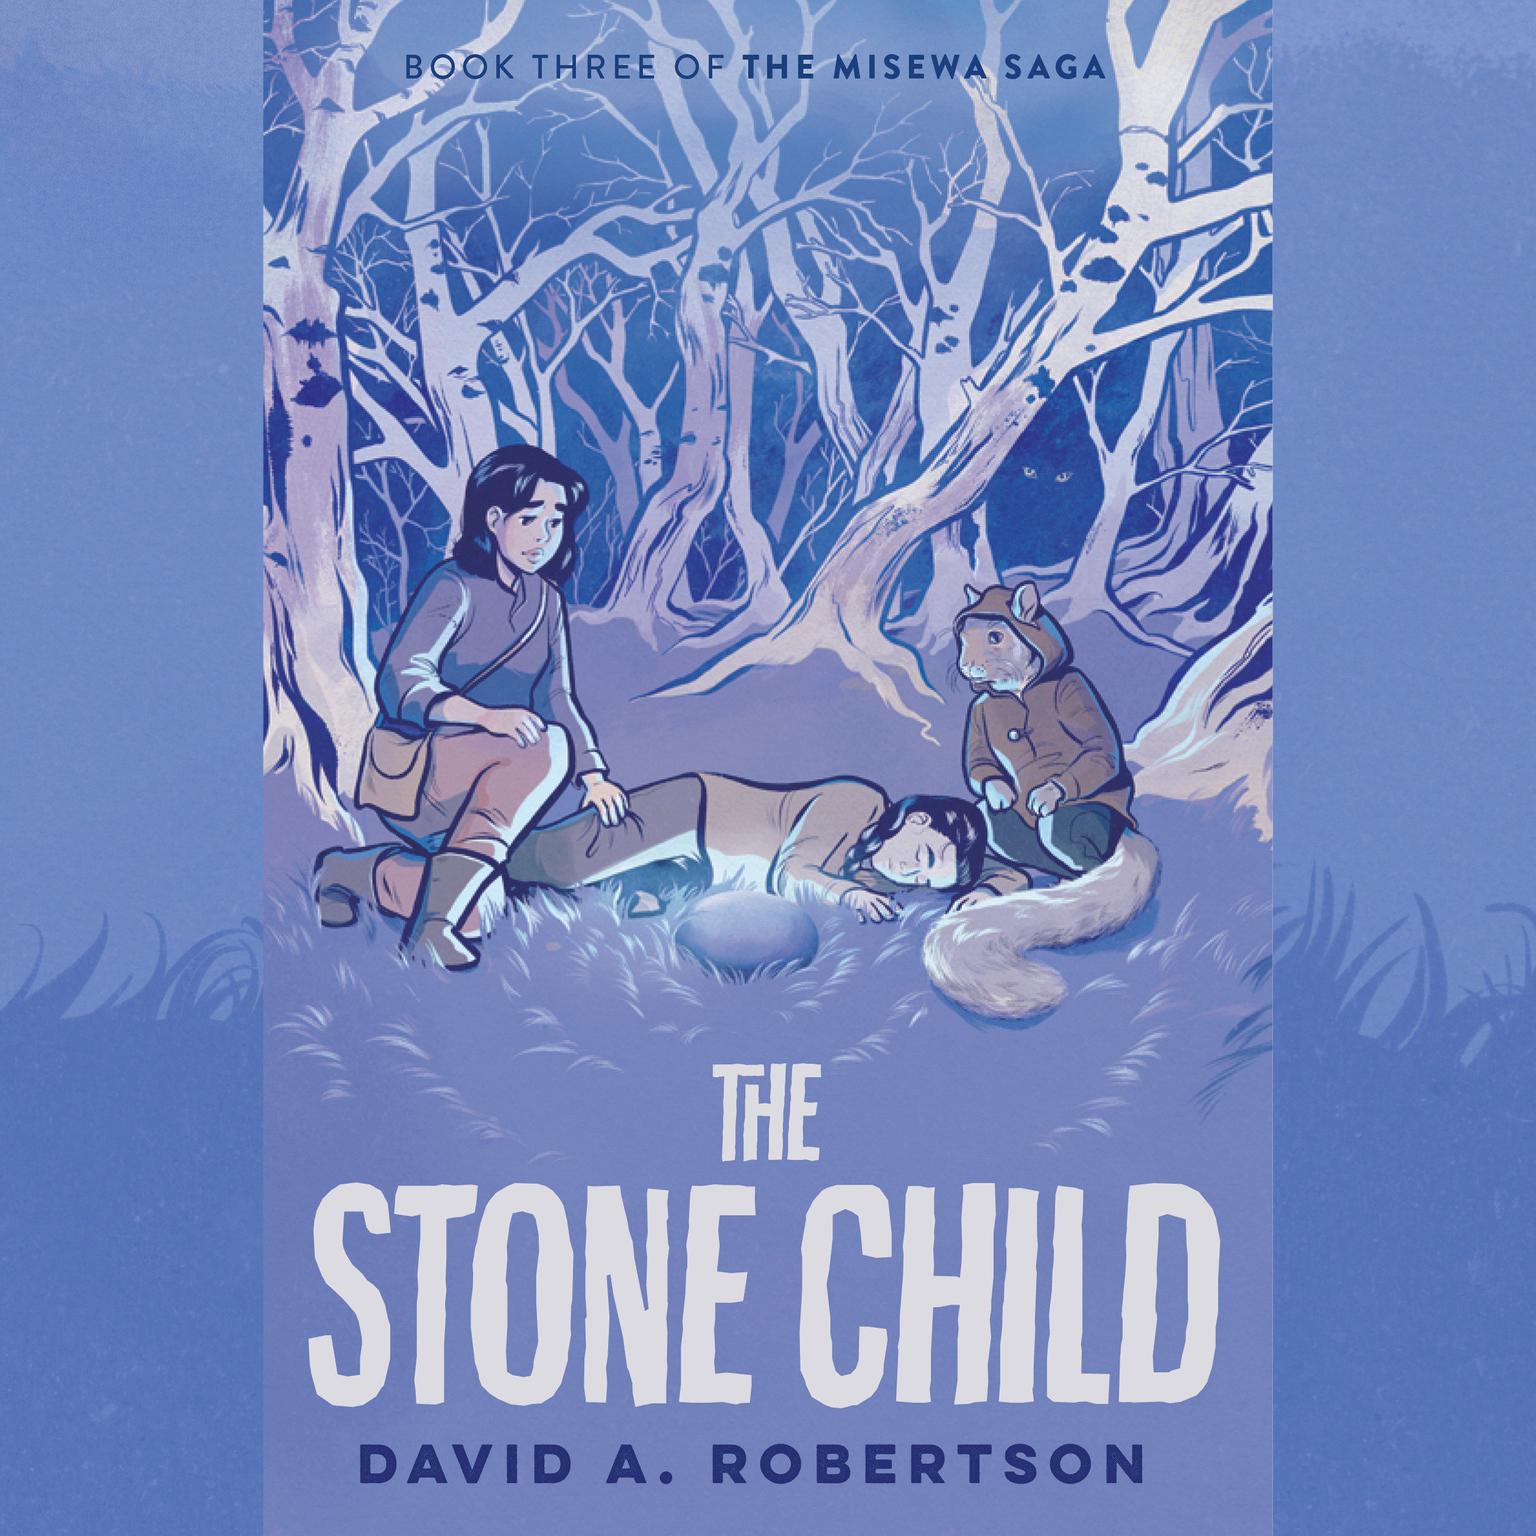 The Stone Child: The Misewa Saga, Book Three Audiobook, by David A. Robertson